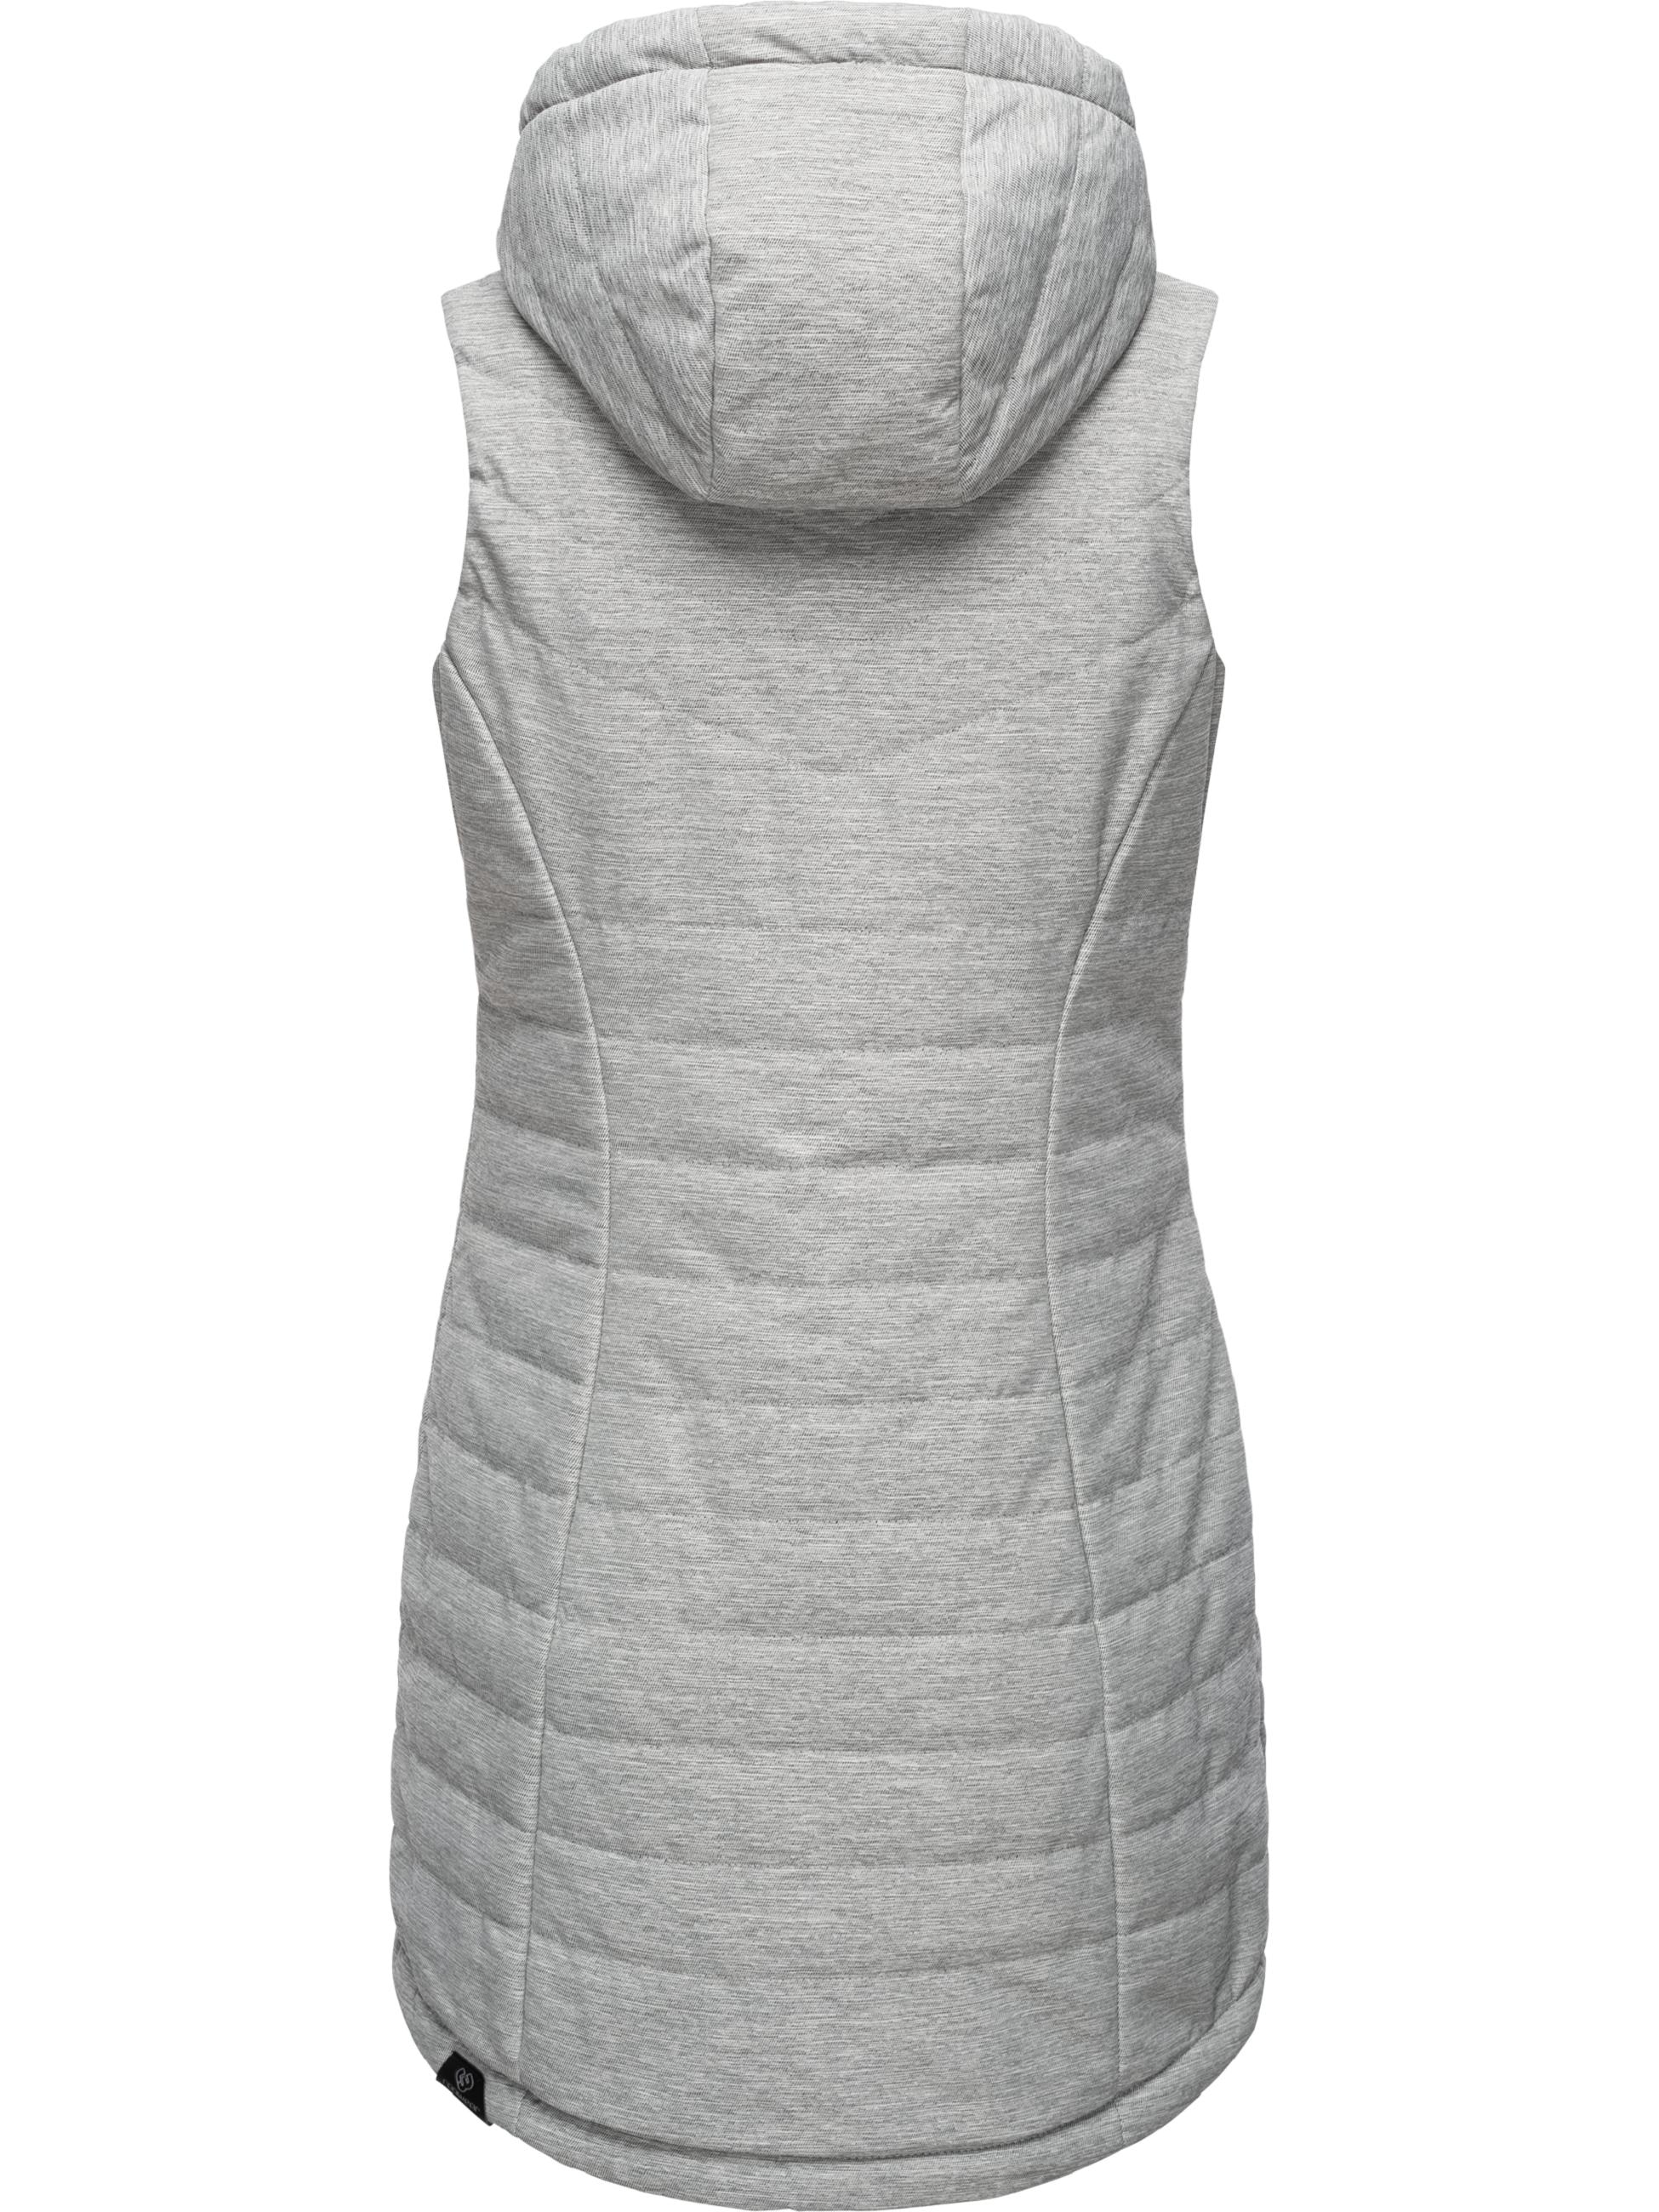 OTTO Vest Steppweste »Steppweste Lucinda Long« Ragwear kaufen bei